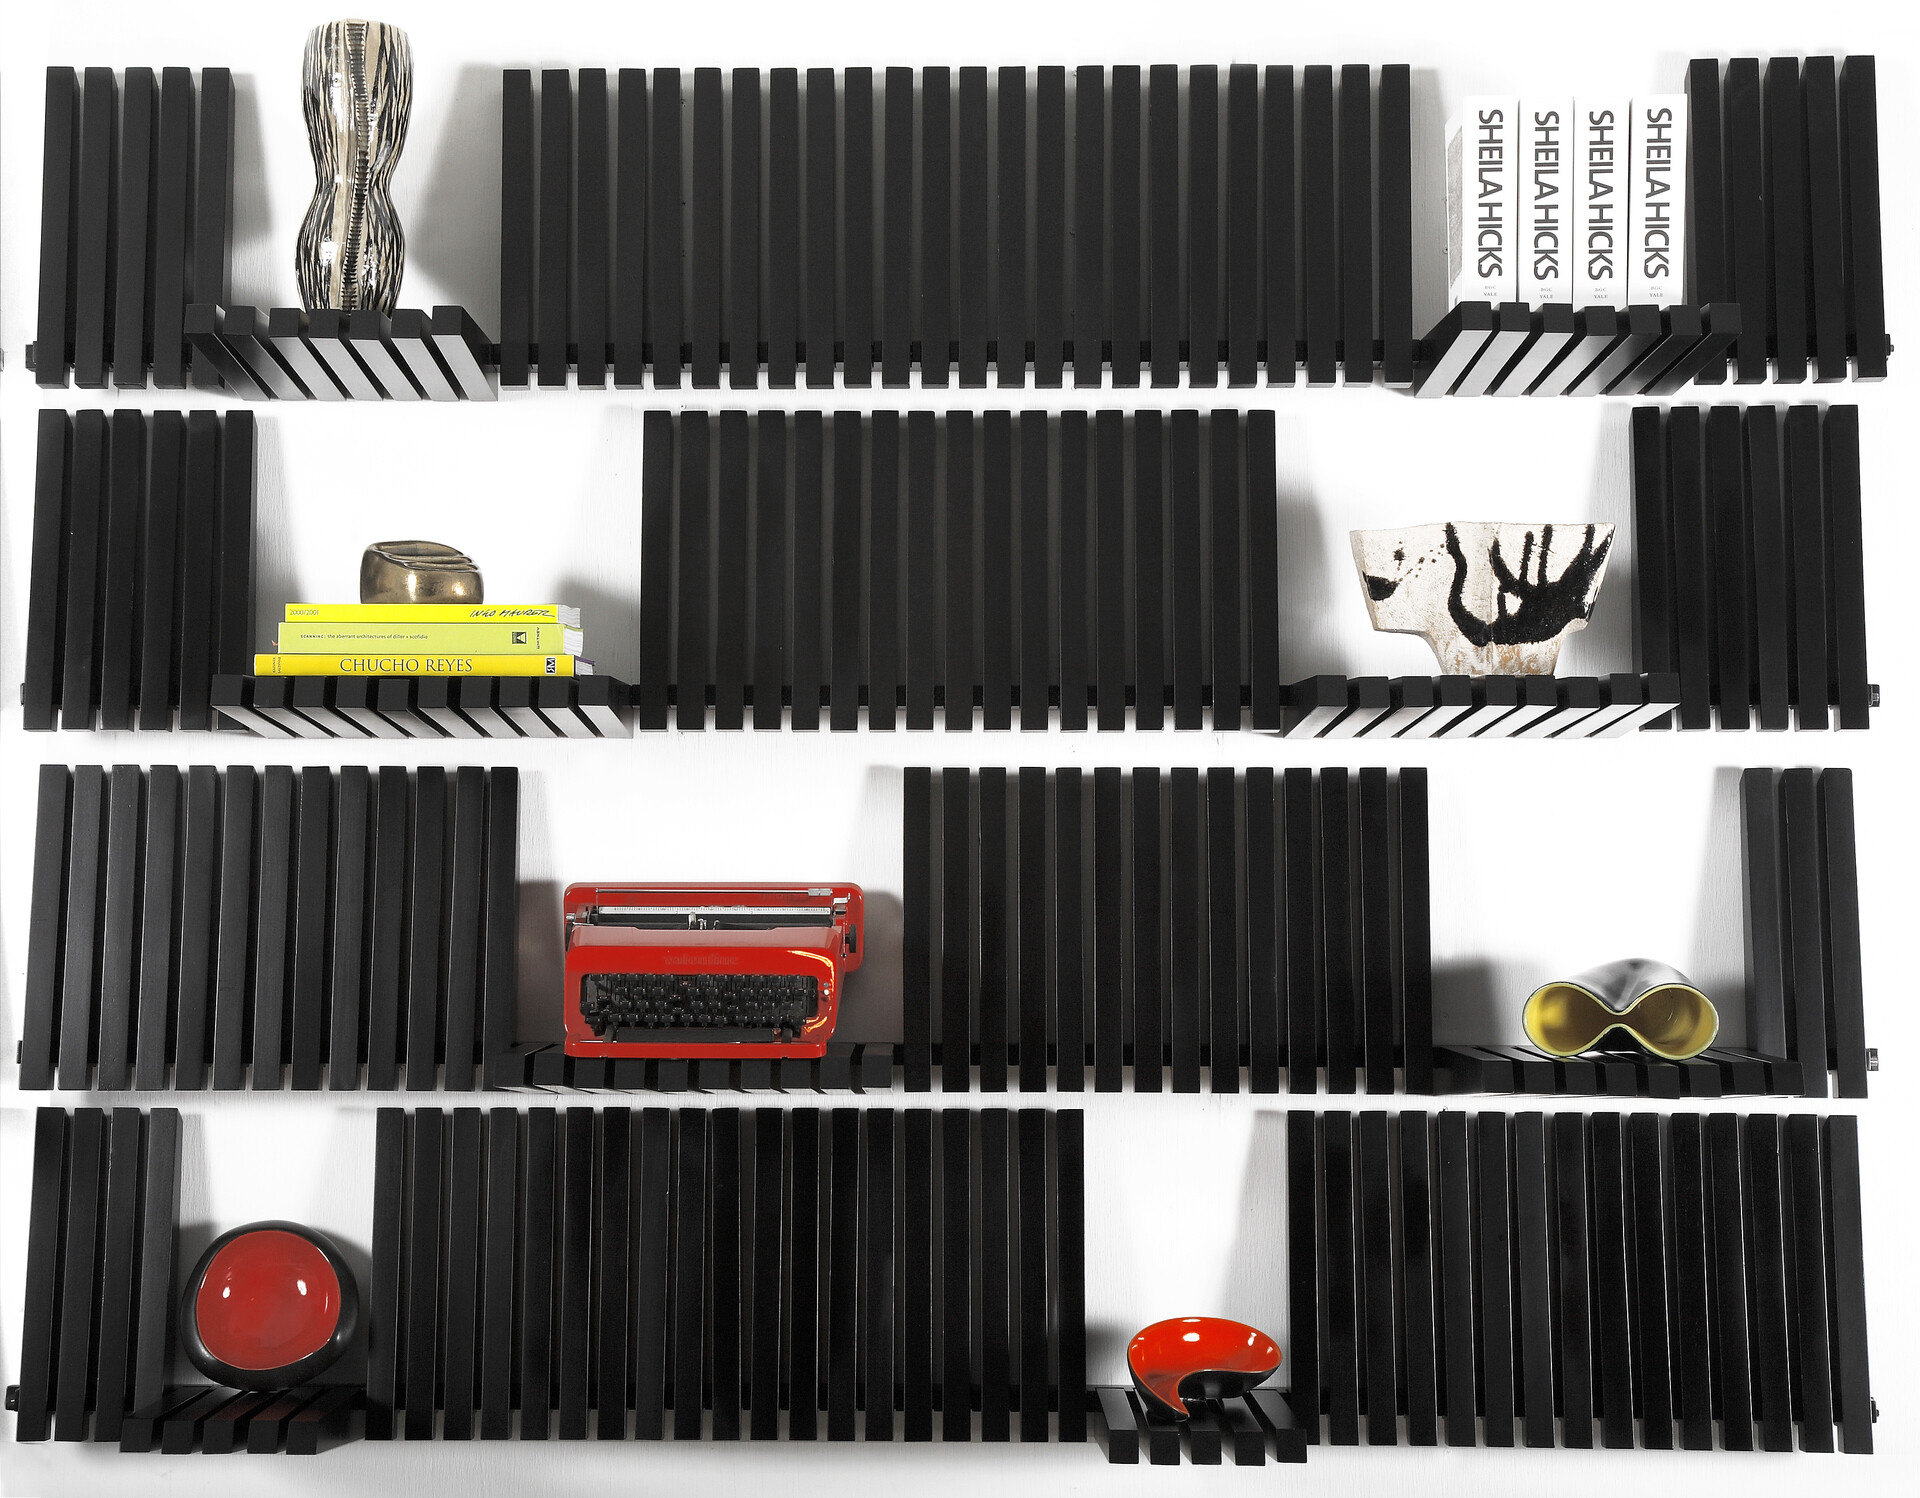 Piano Shelf - creativity and ingenuity by Sebastian Errazuriz (4)